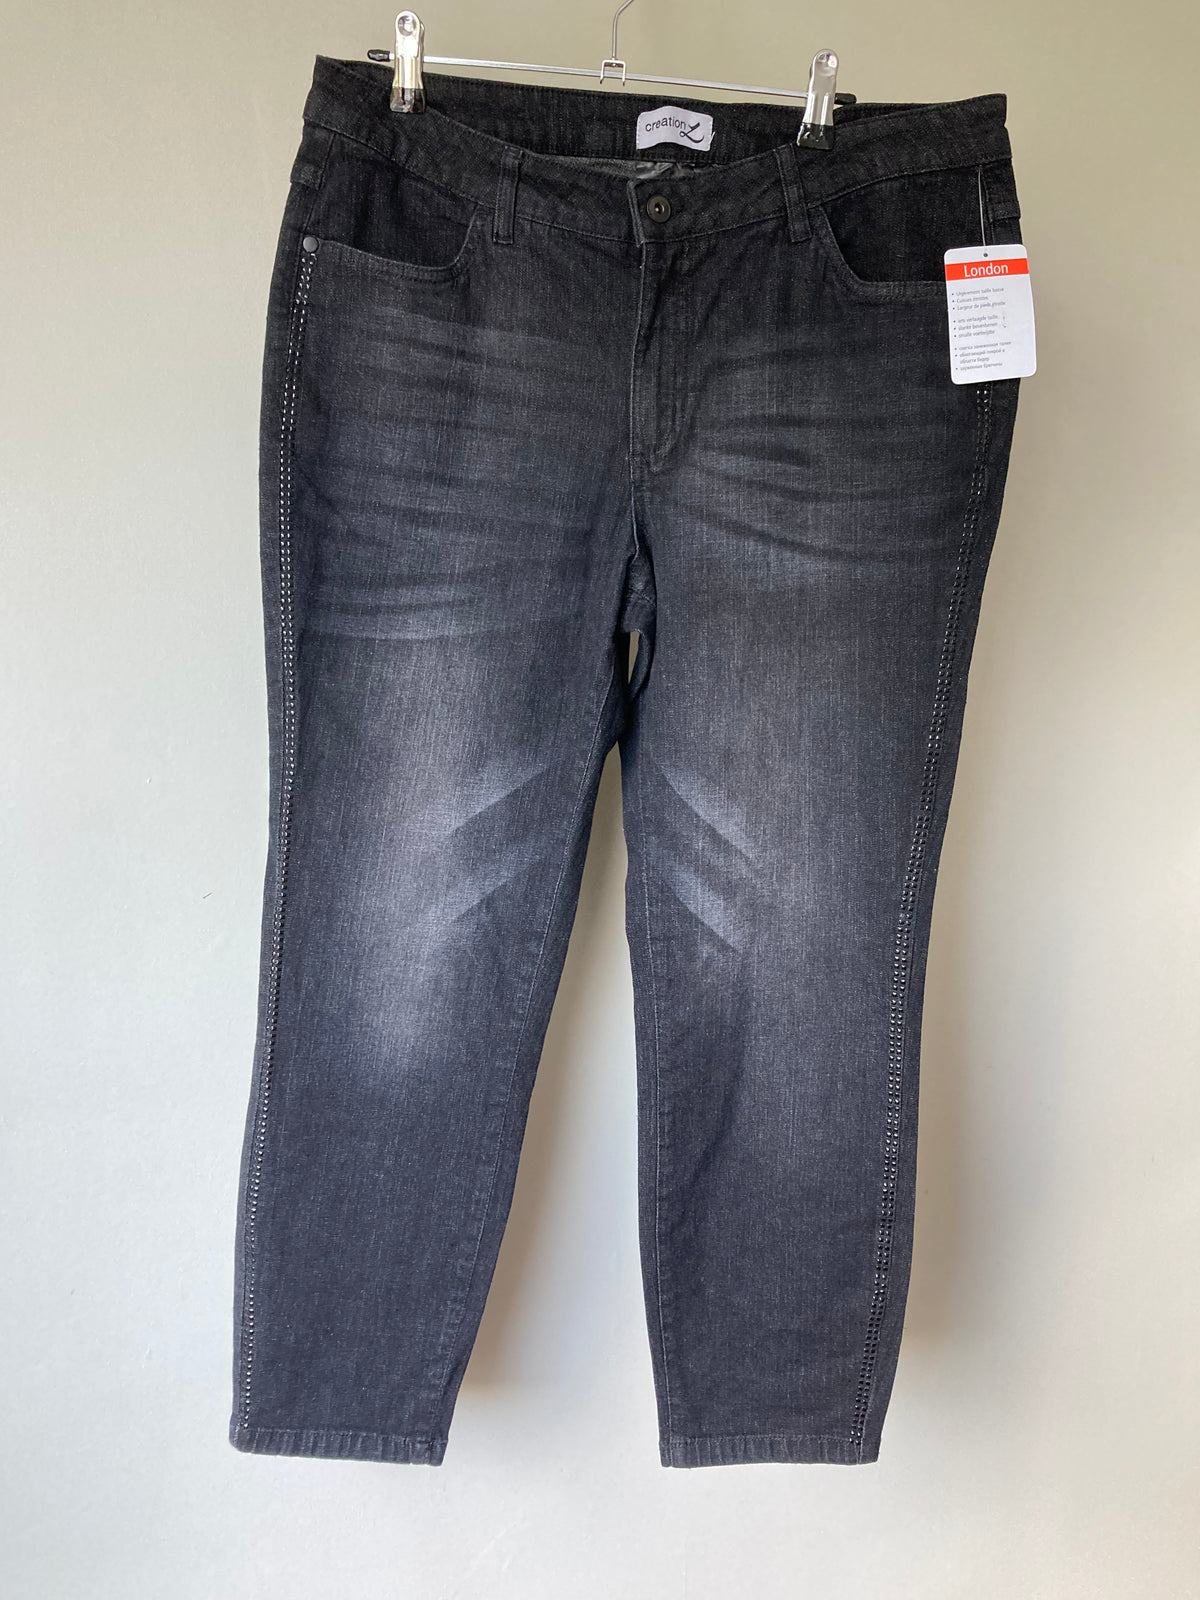 Black jewel detail jeans by CREATION L - Size 16